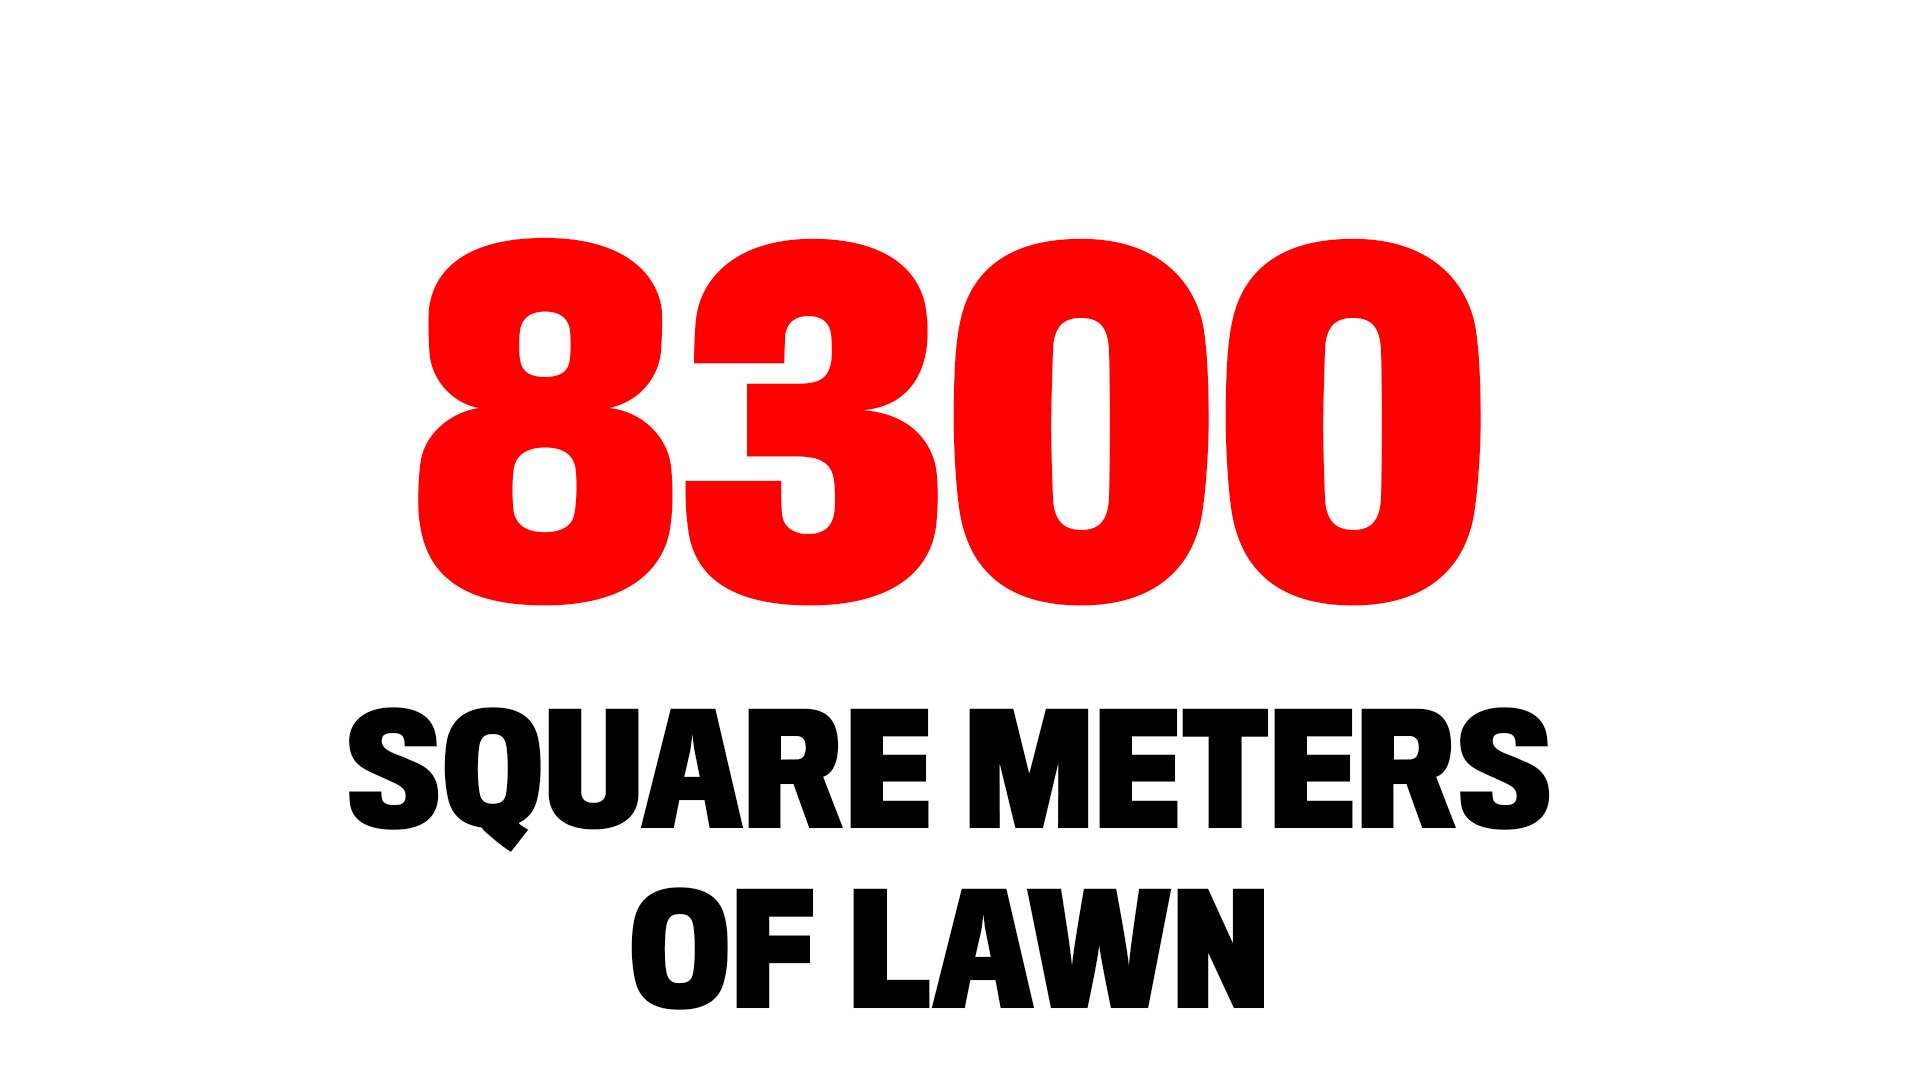 Facts BayArena square meters of lawn